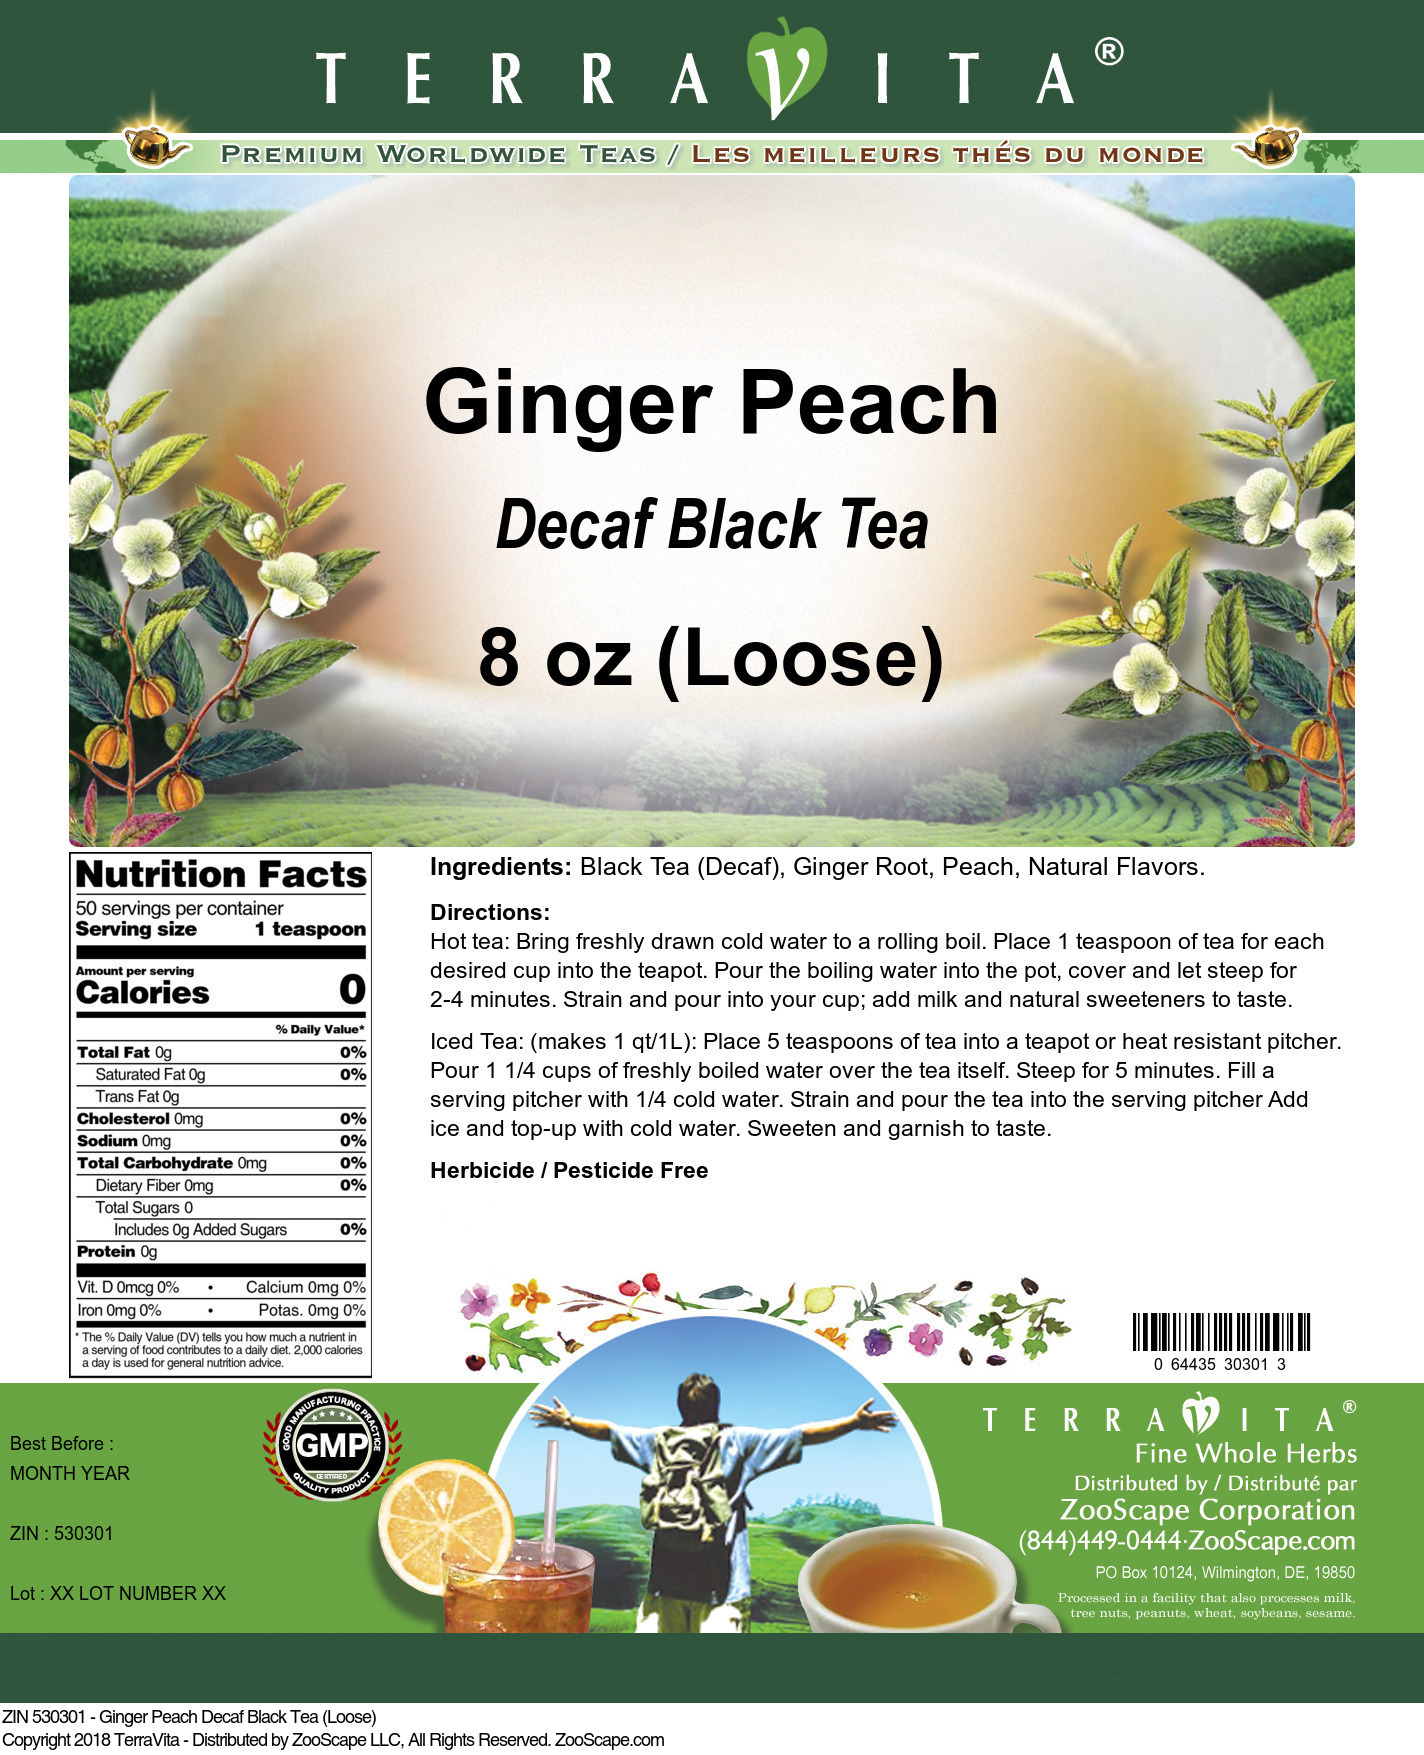 Ginger Peach Decaf Black Tea (Loose) - Label